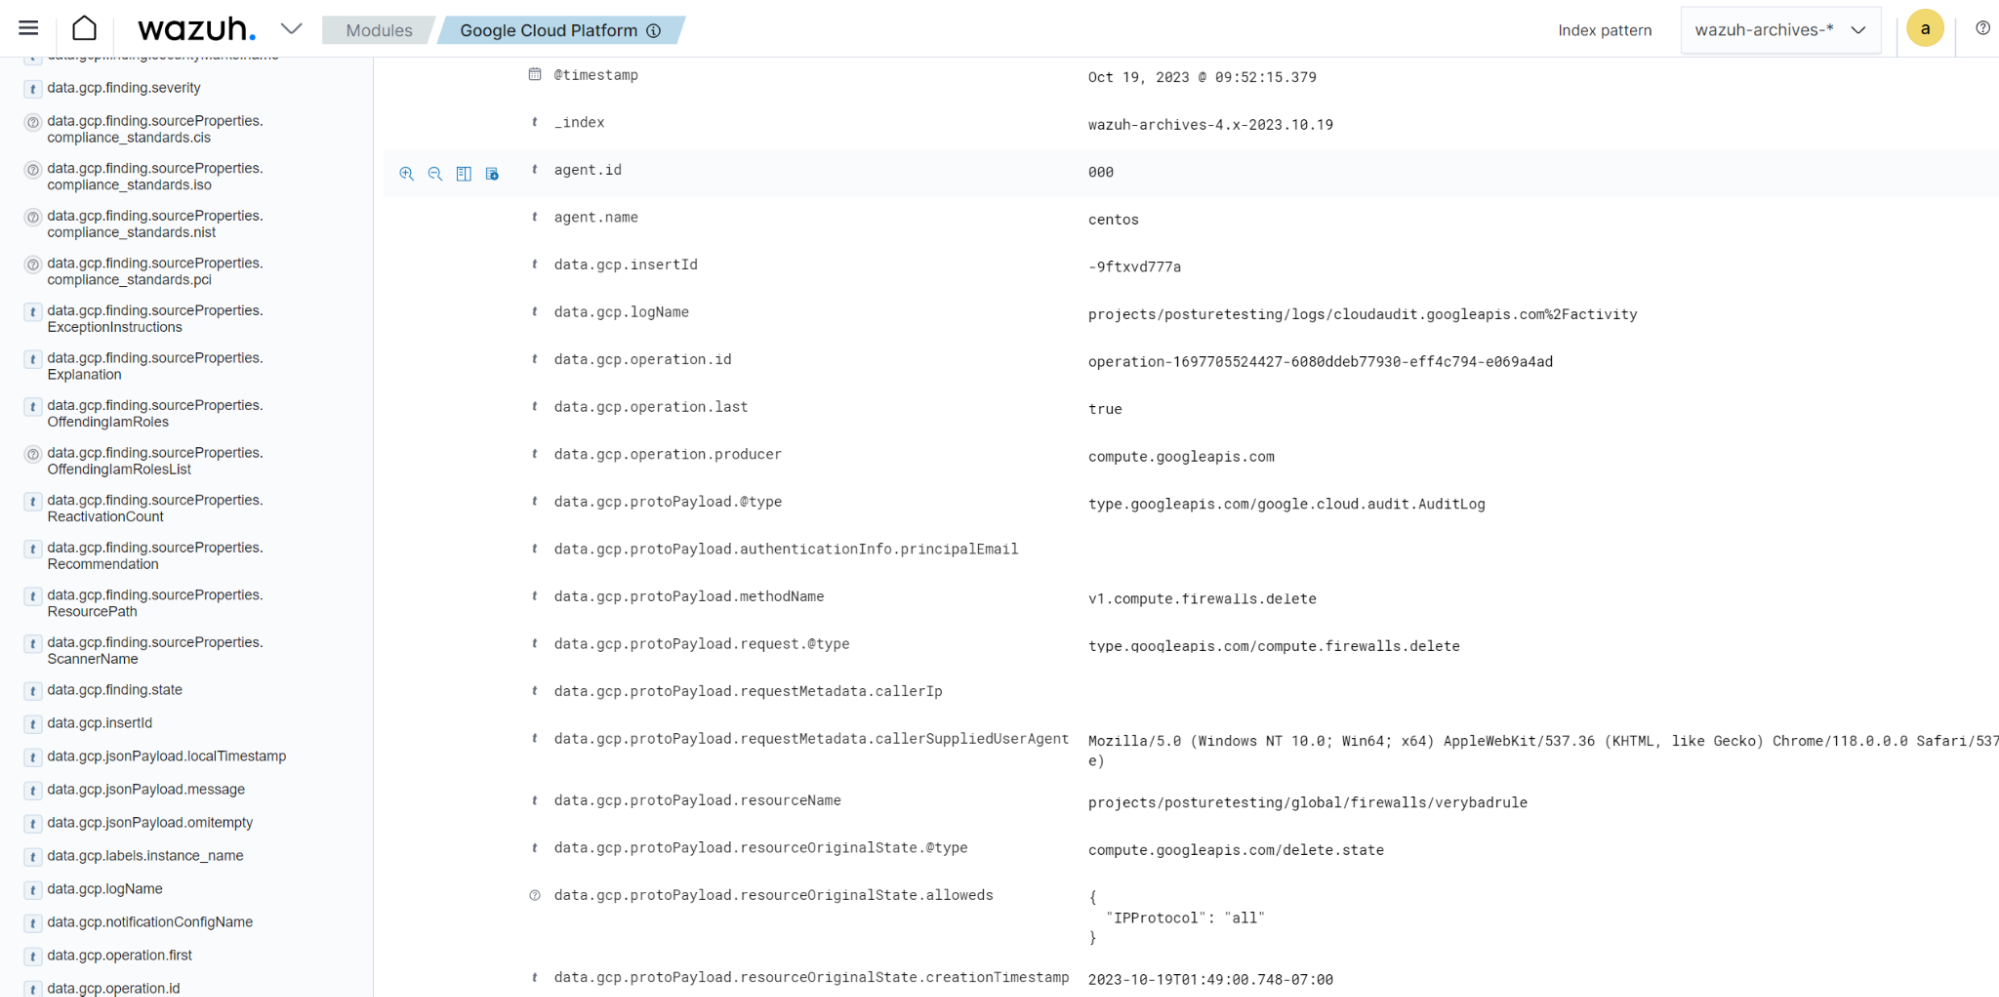 Example GCP log on the Wazuh dashboard